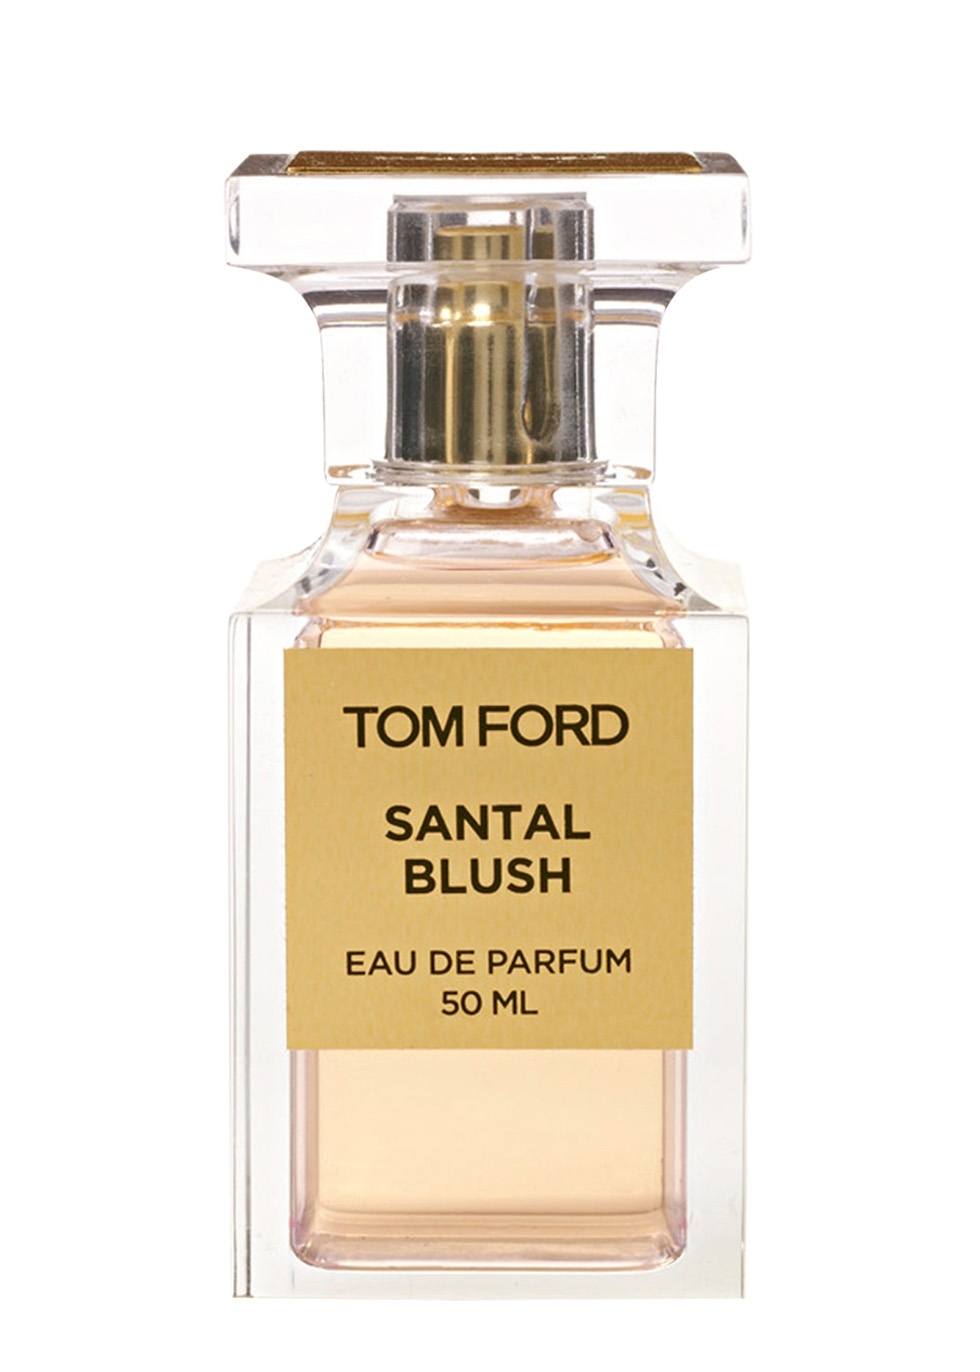 Tom Ford Santal Blush Eau De Parfum 50ml - Harvey Nichols